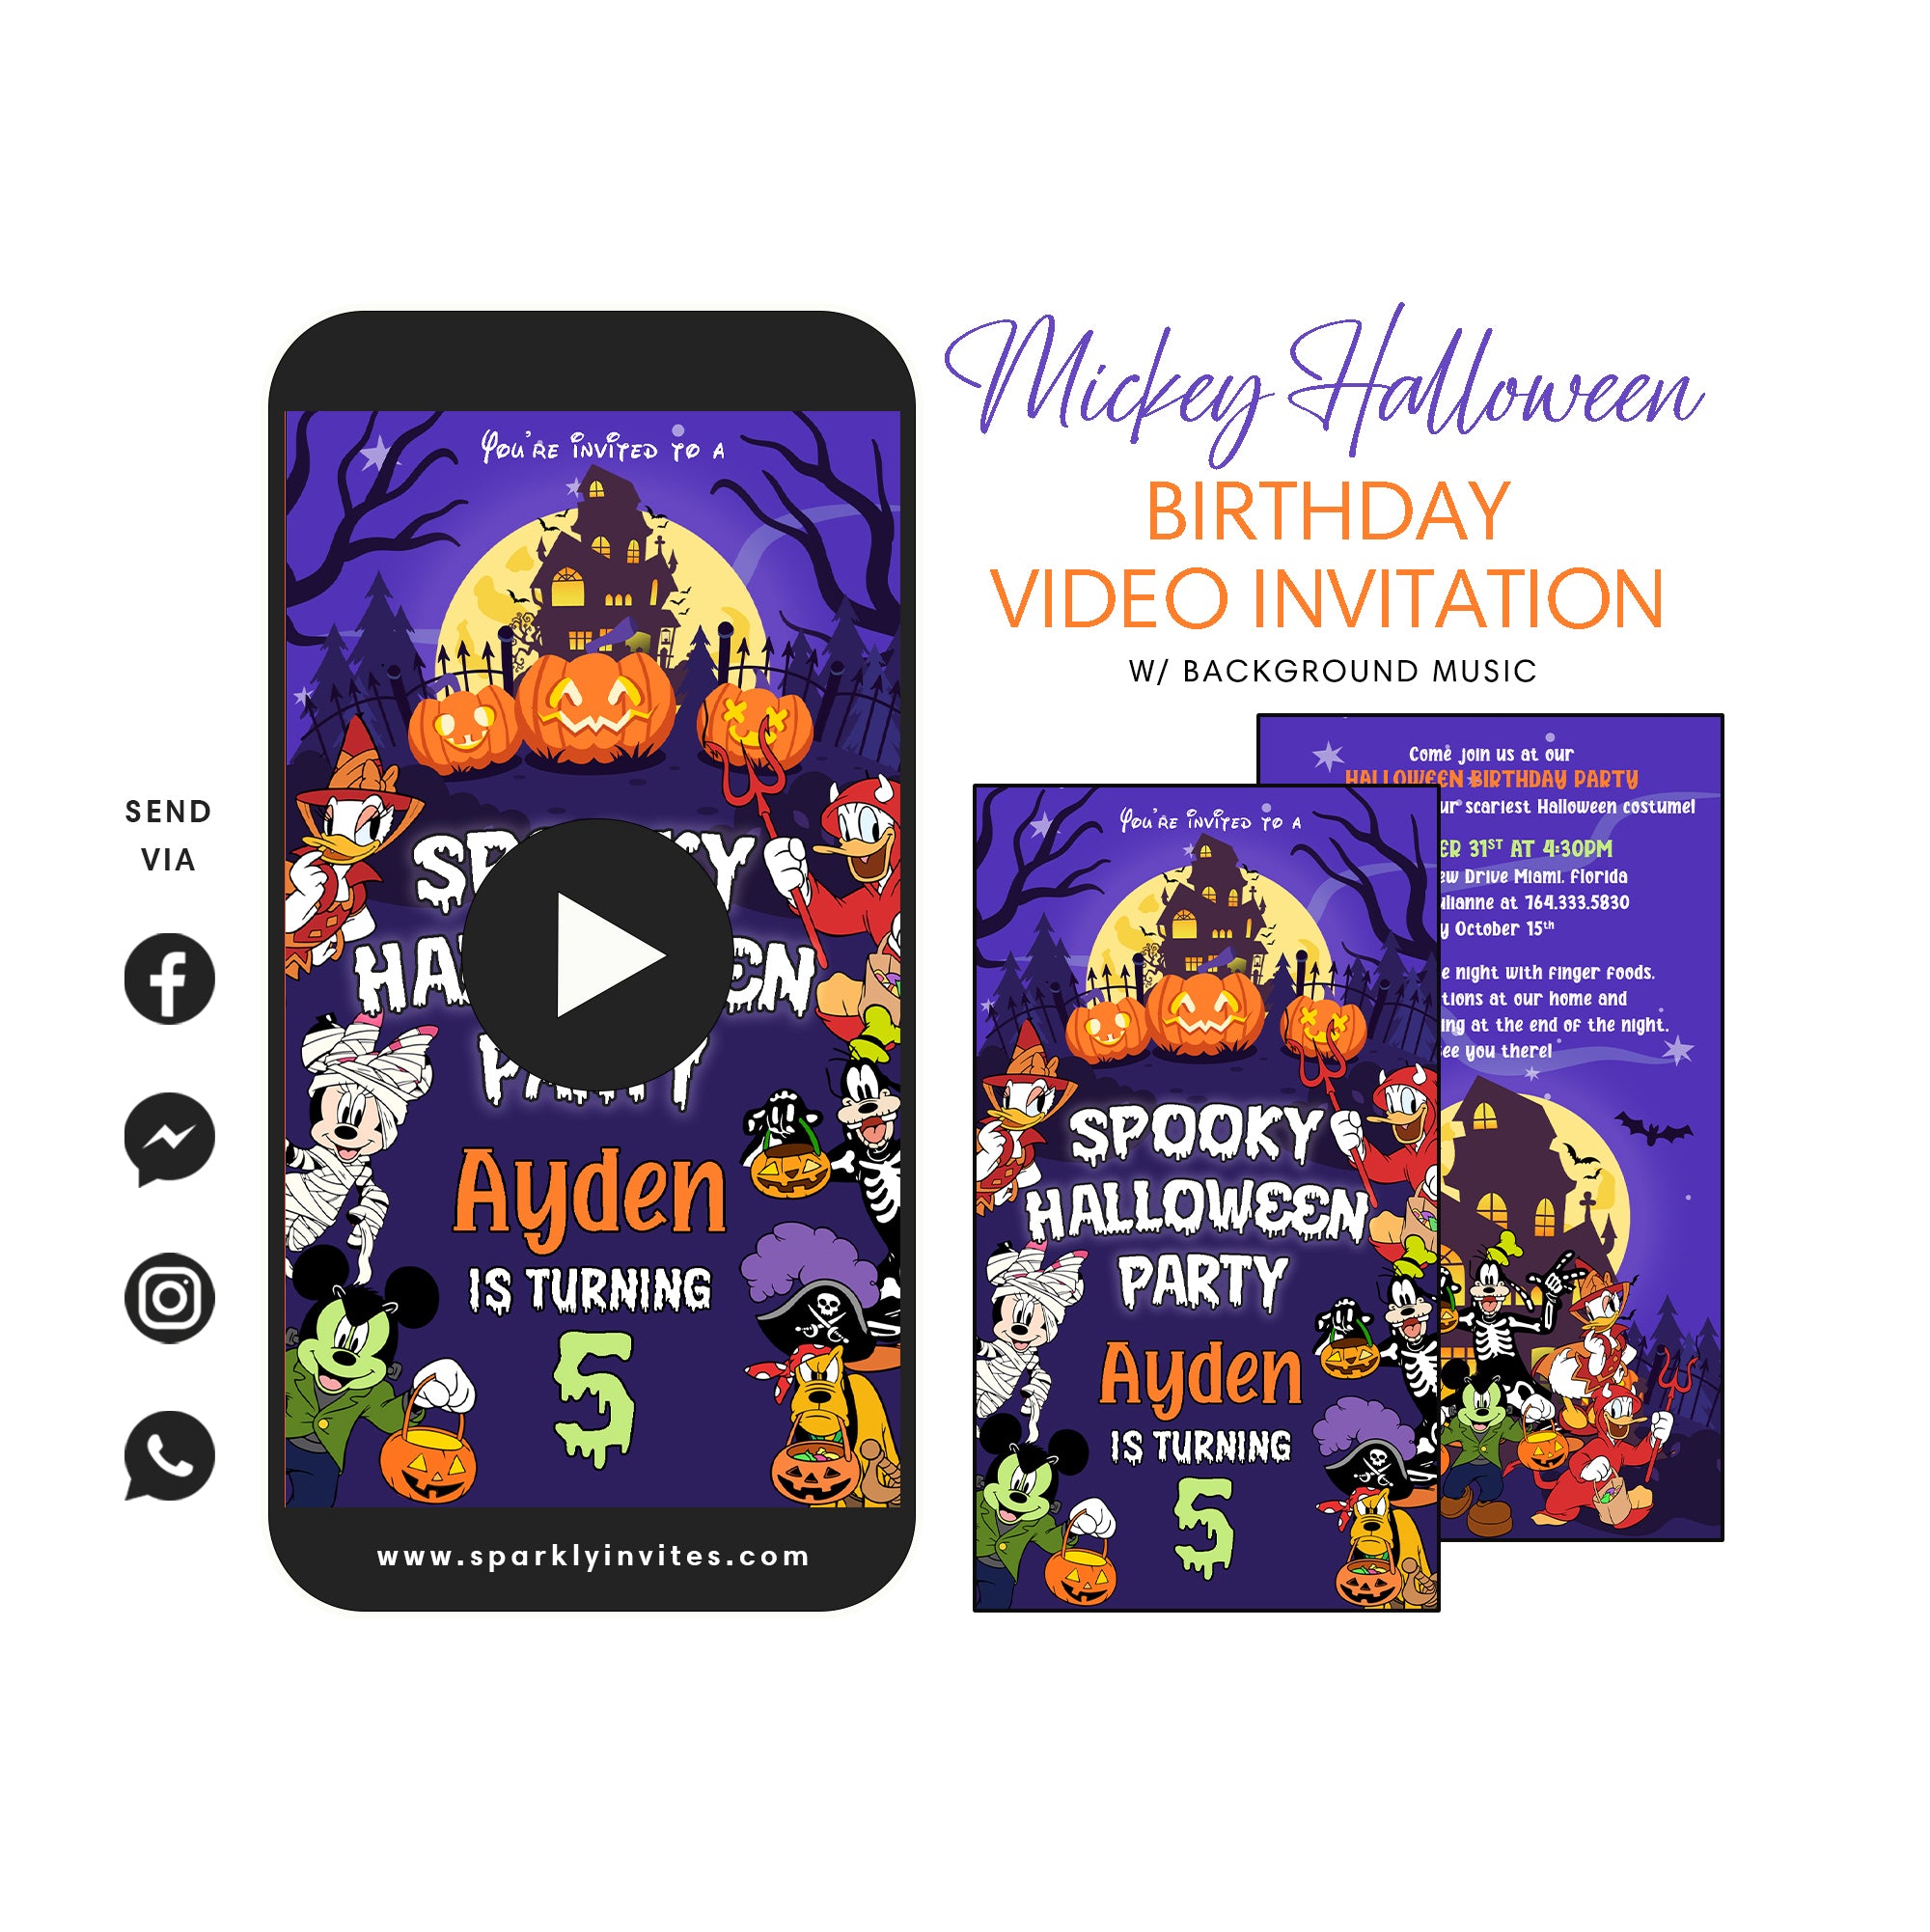 Mickey Halloween Party Video Invitation 